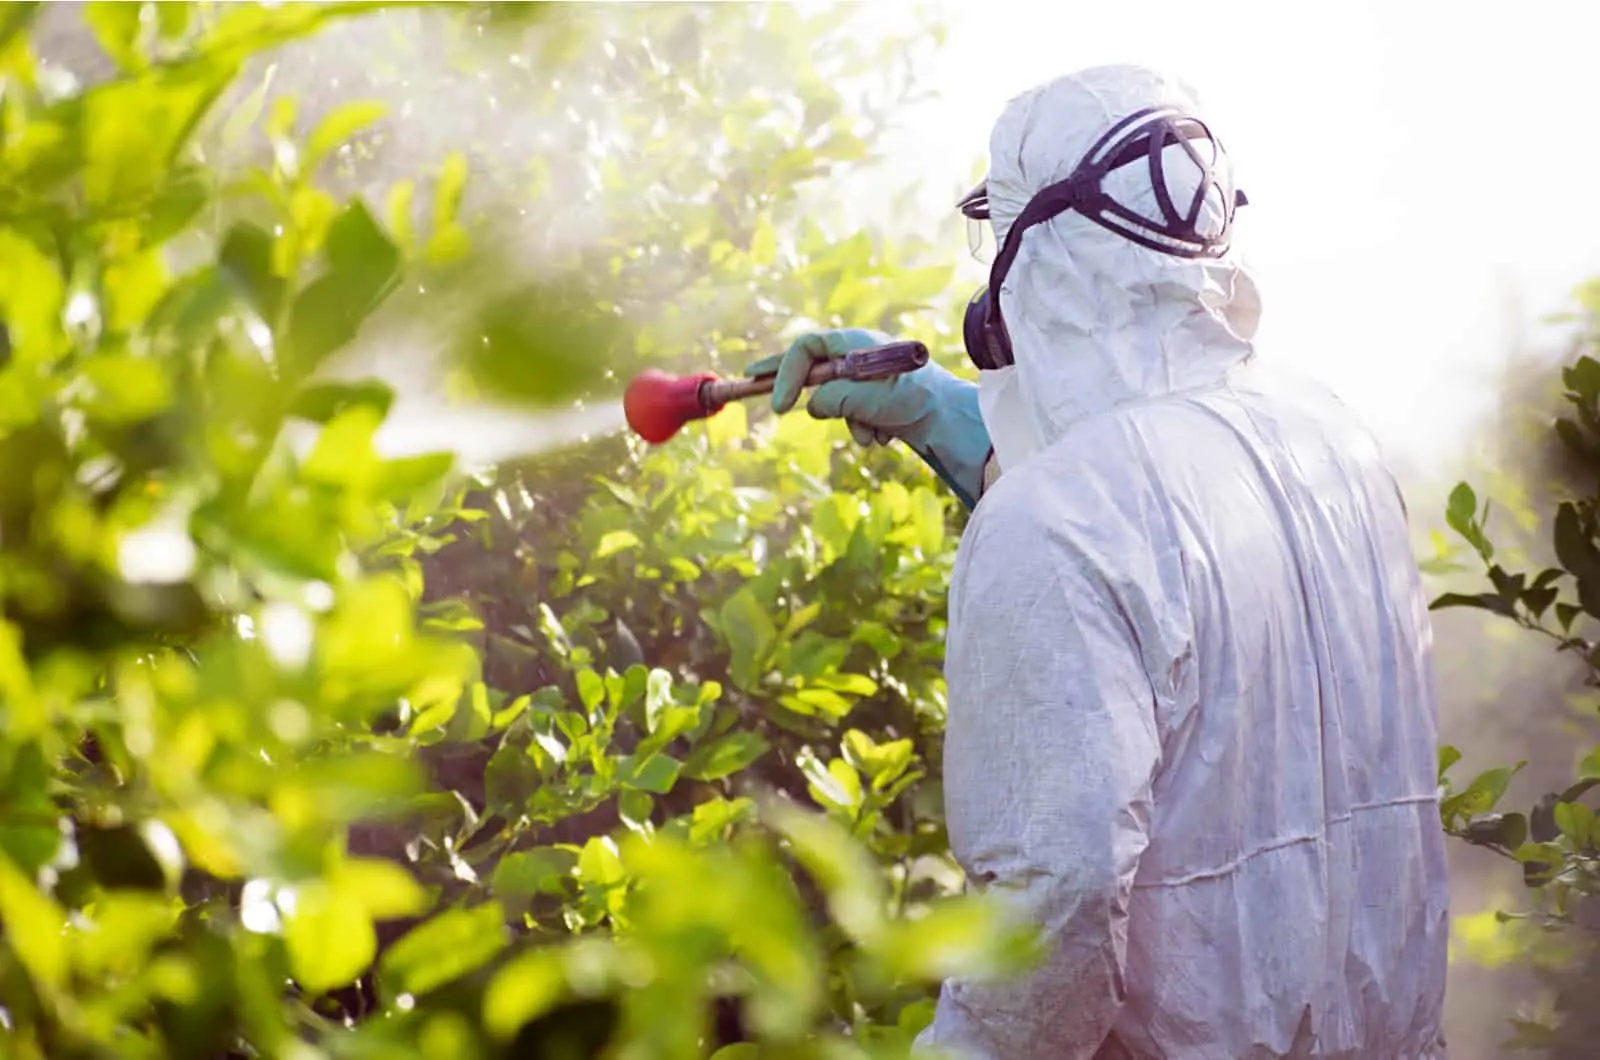 man spraying the lemon trees with fertilizer